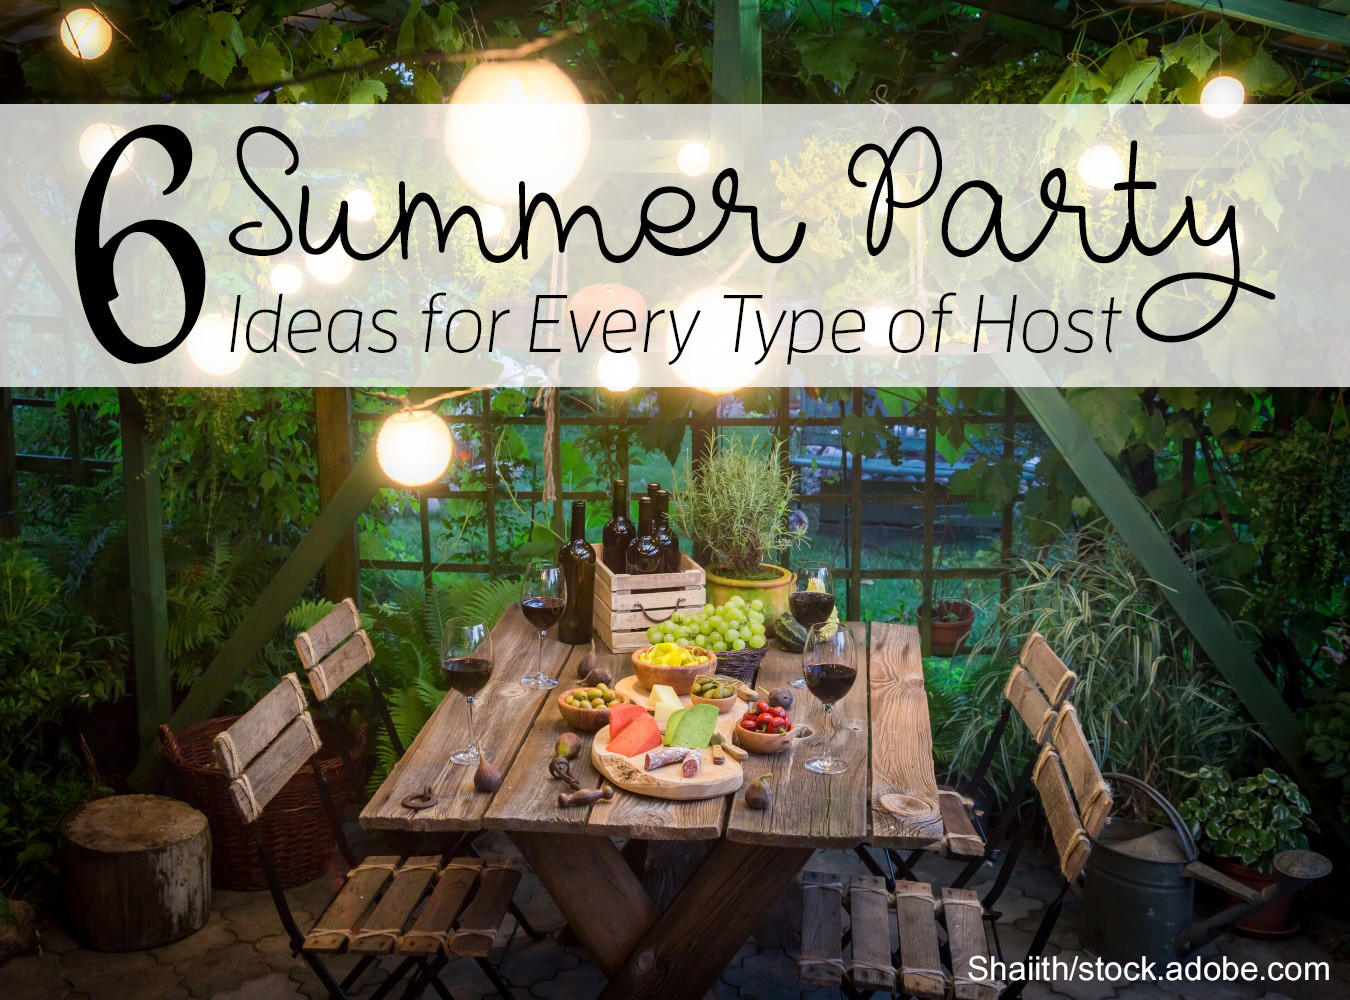 Summer Garden Party Ideas
 6 Best Summer Garden Party Ideas for Every Type of Host